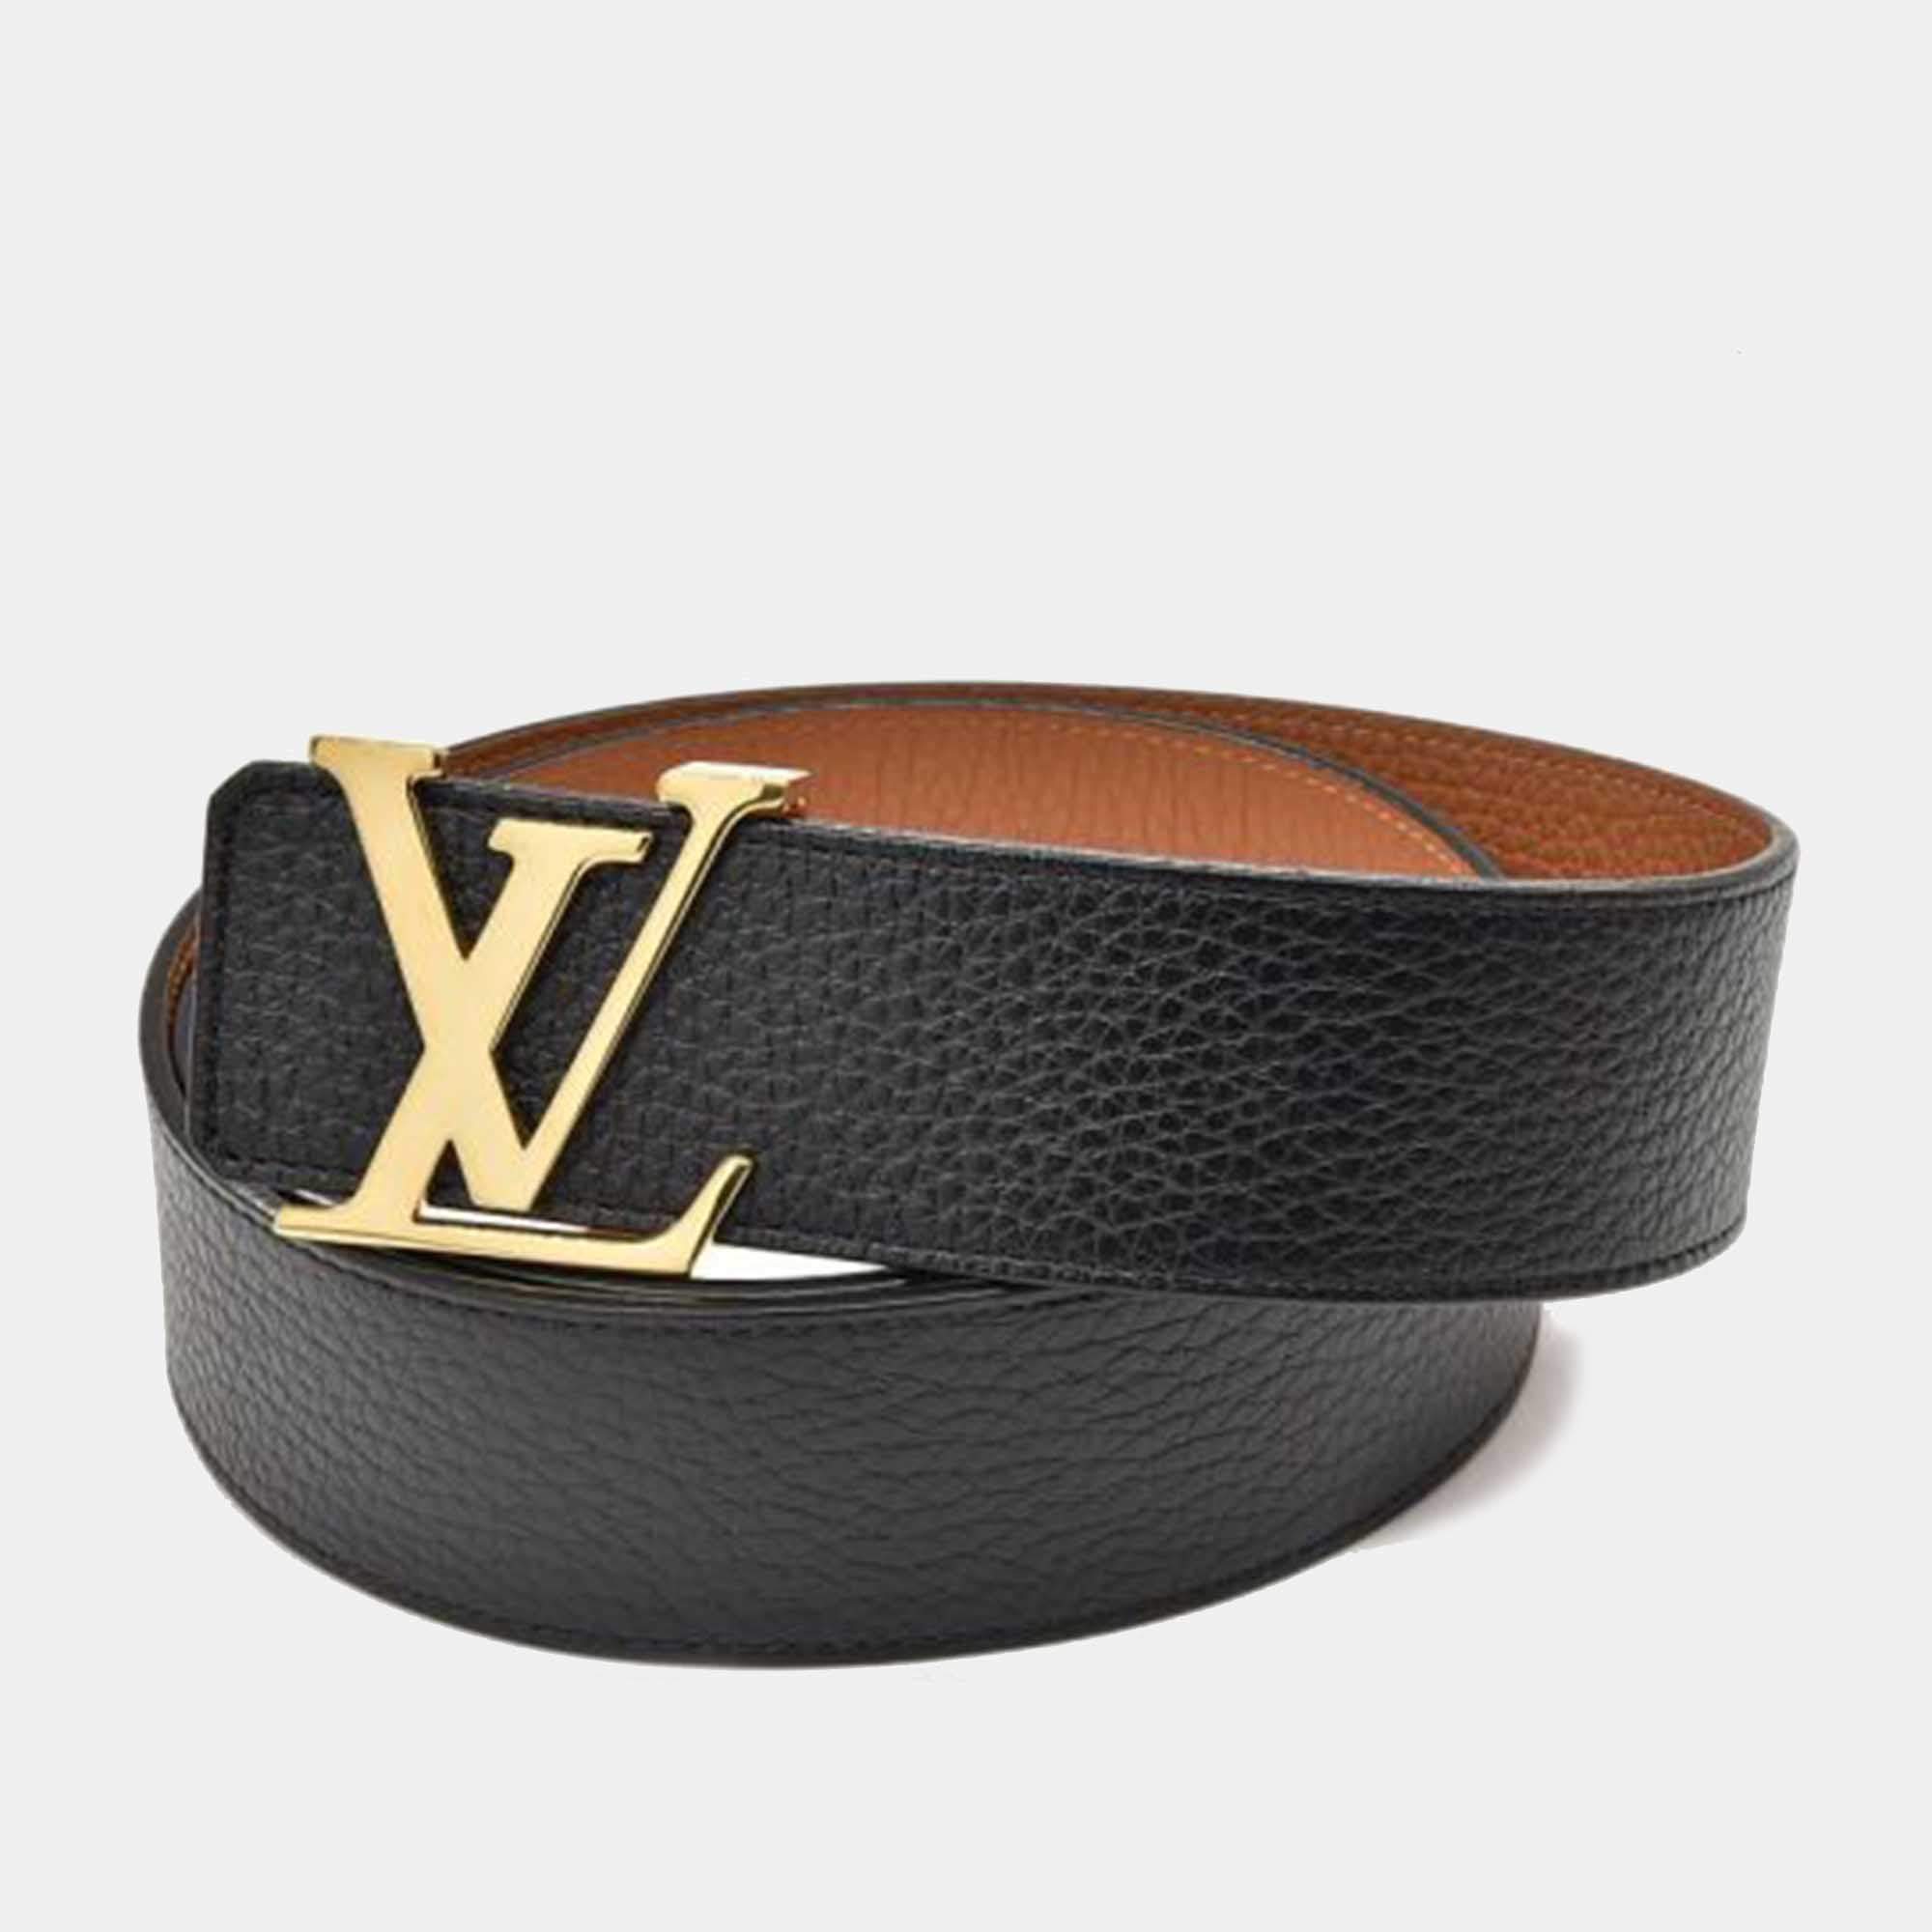 Diamond Louis Vuitton Belt Buc: buy online in NYC. Best price at TRAXNYC.